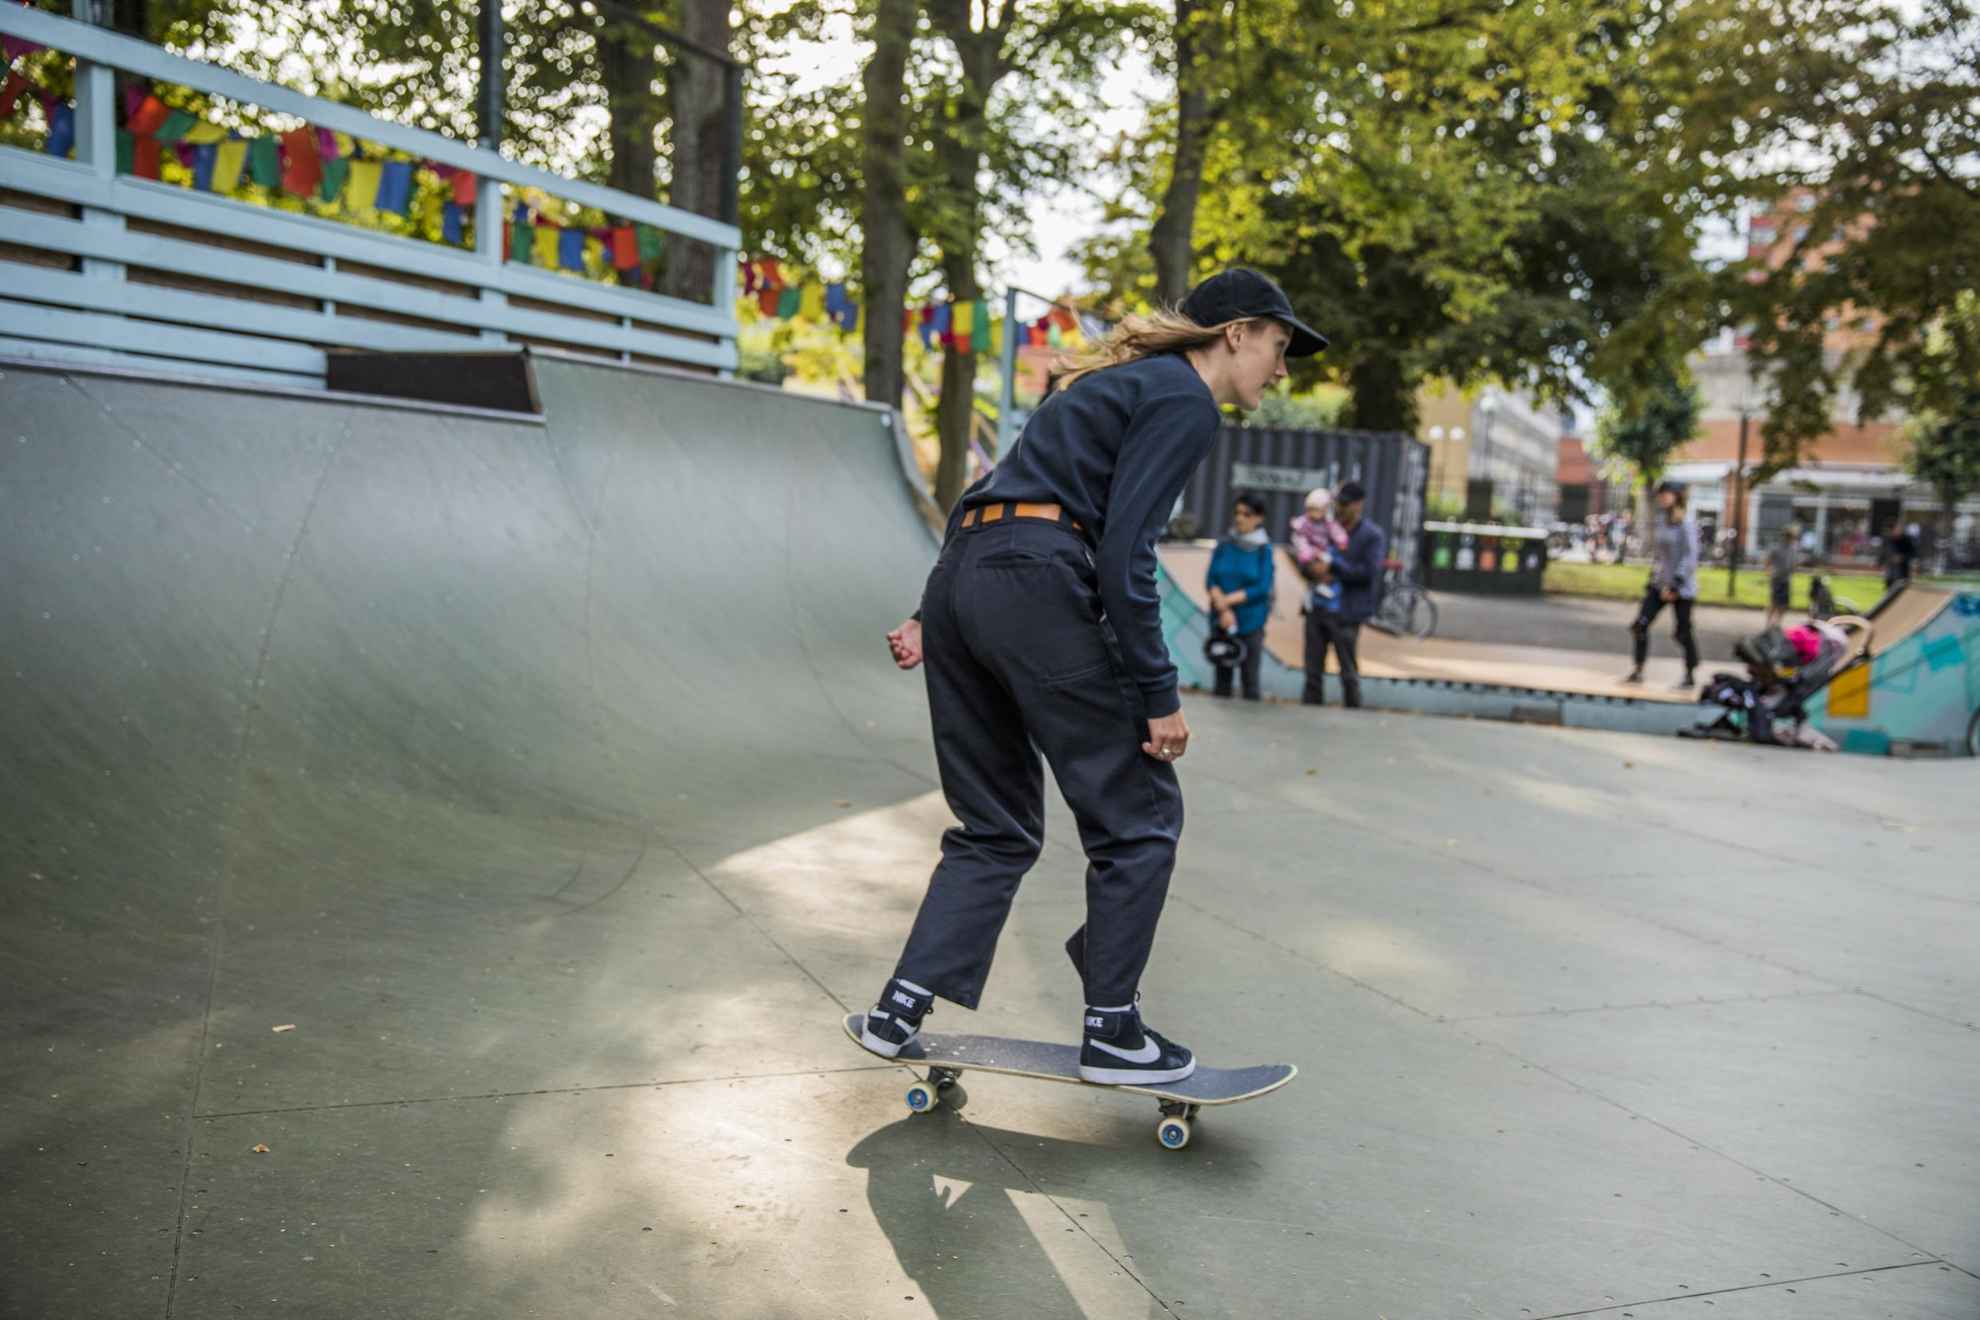 Skateboarding in Folkets Park